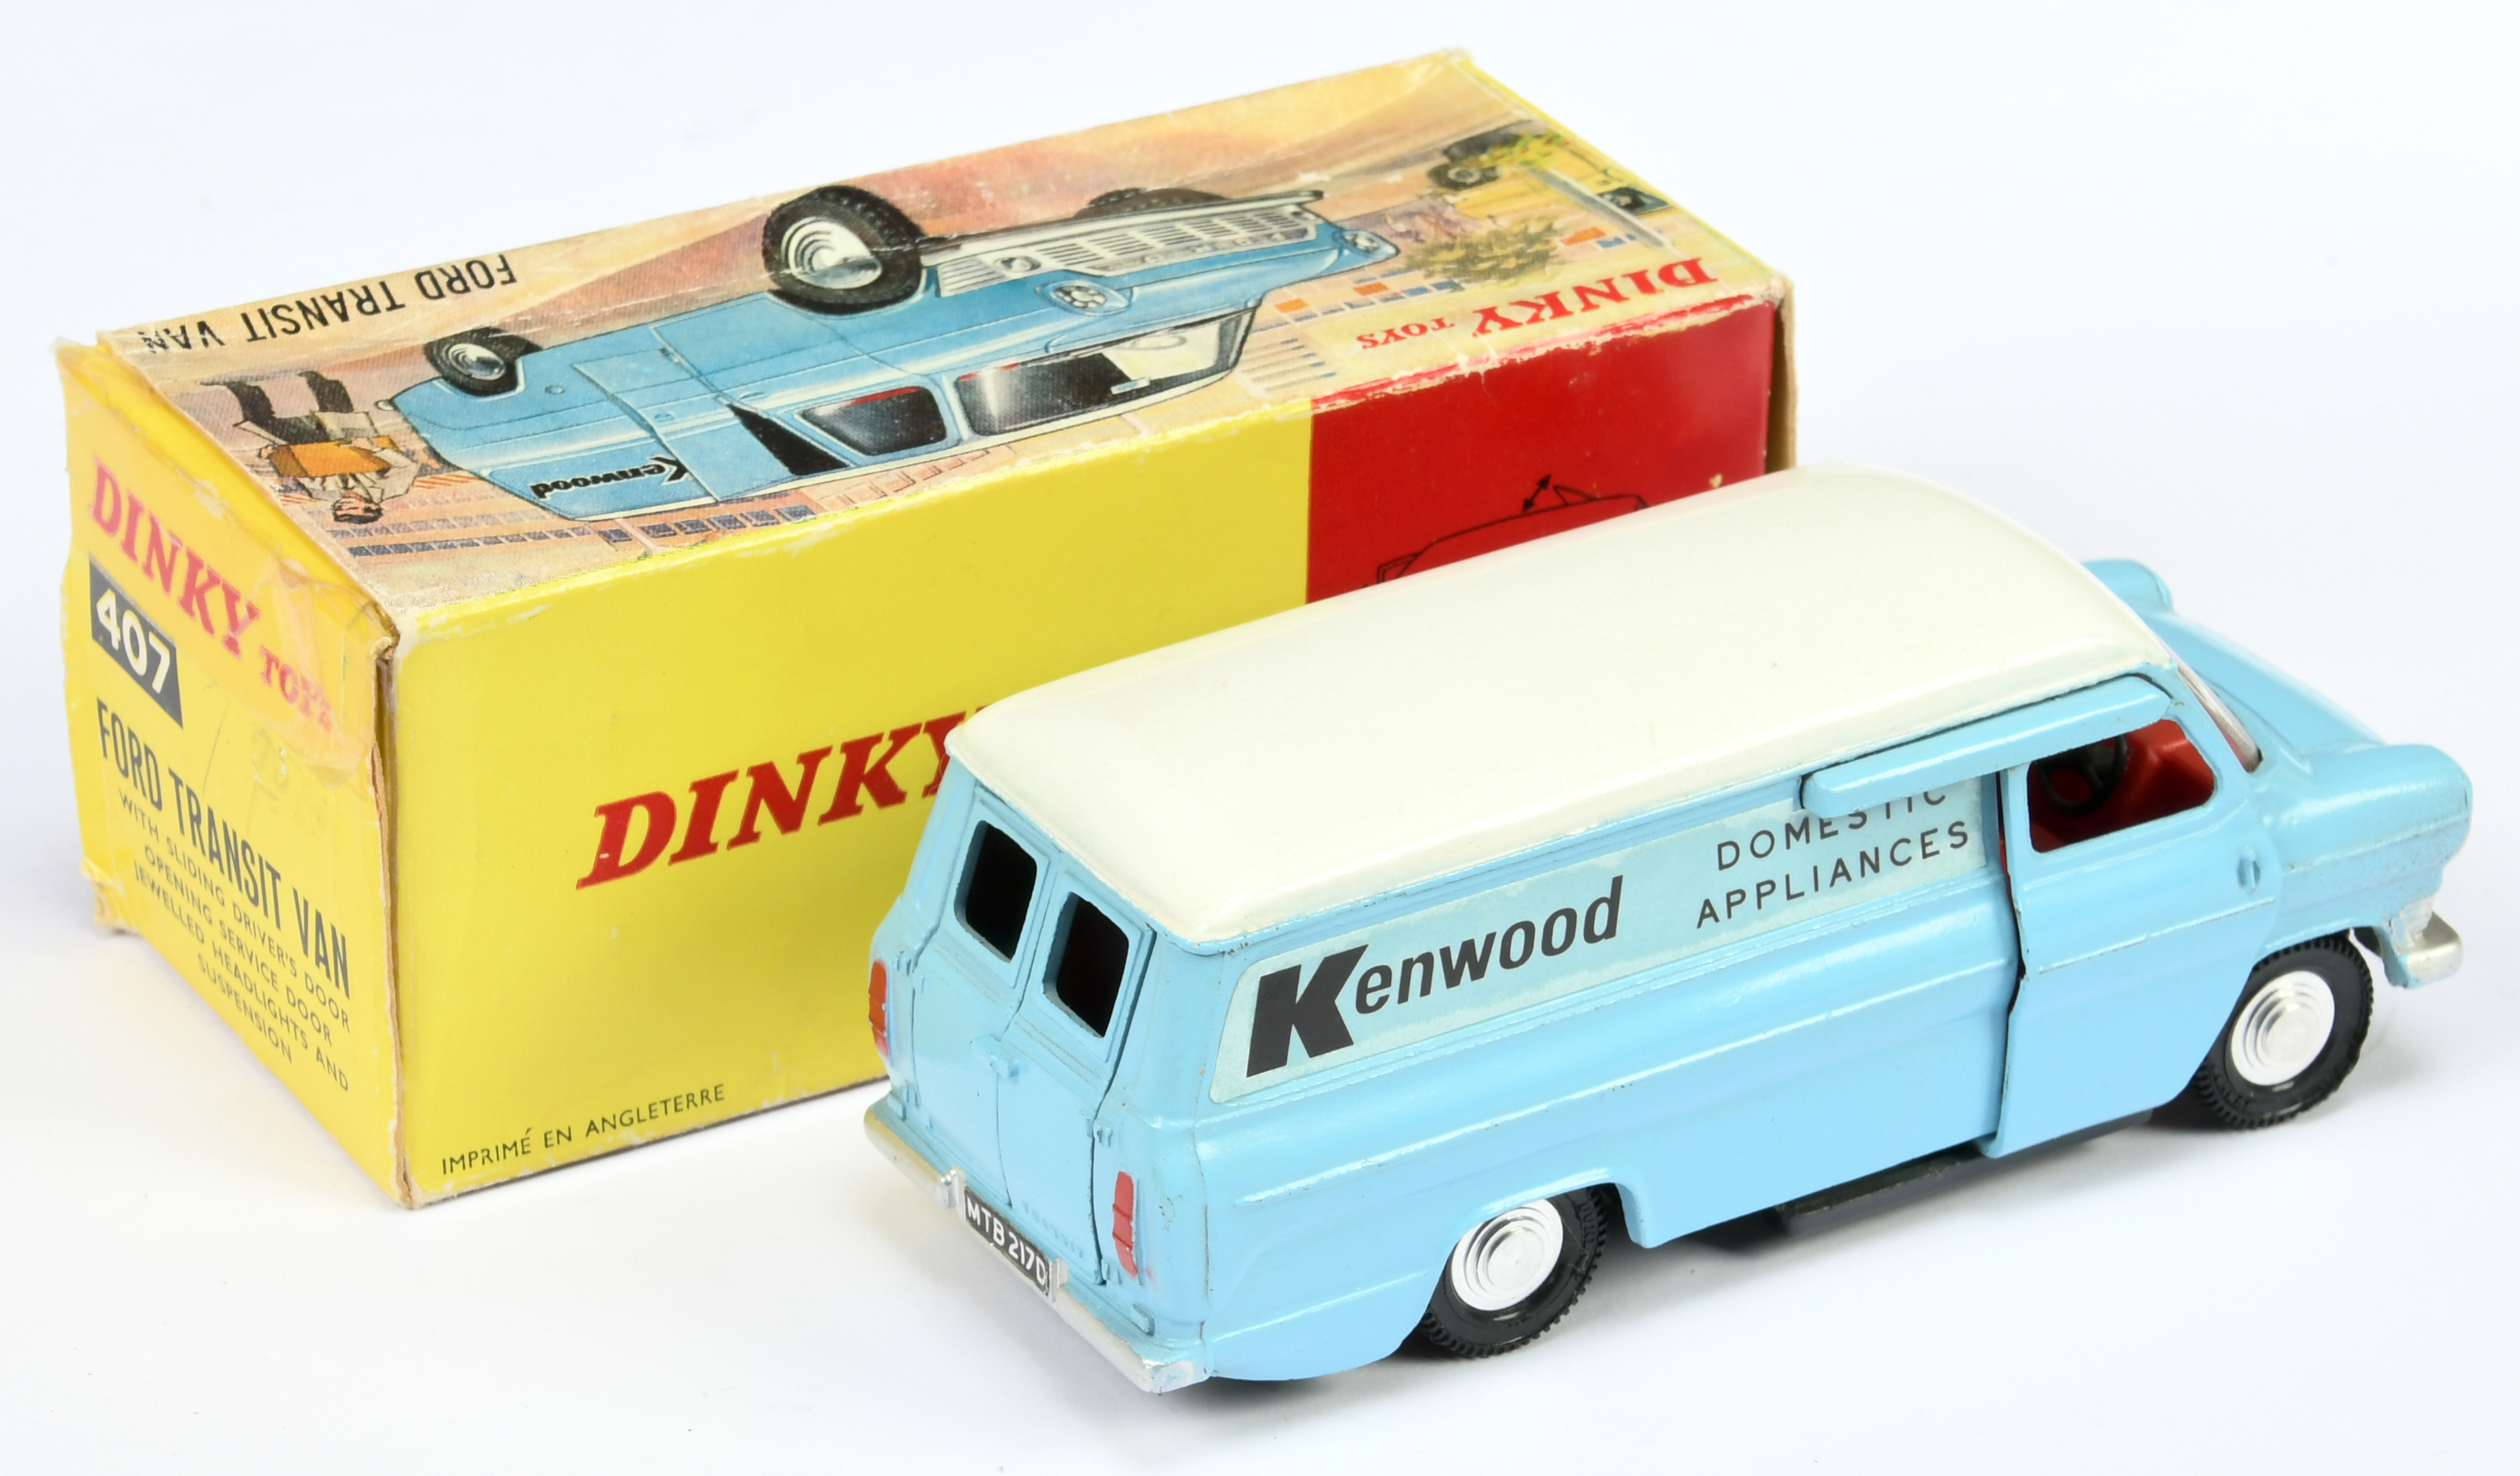 Dinky Toys 407 Ford transit van "Kenwood" - light blue body, white roof, dark grey base, red inte... - Image 2 of 2